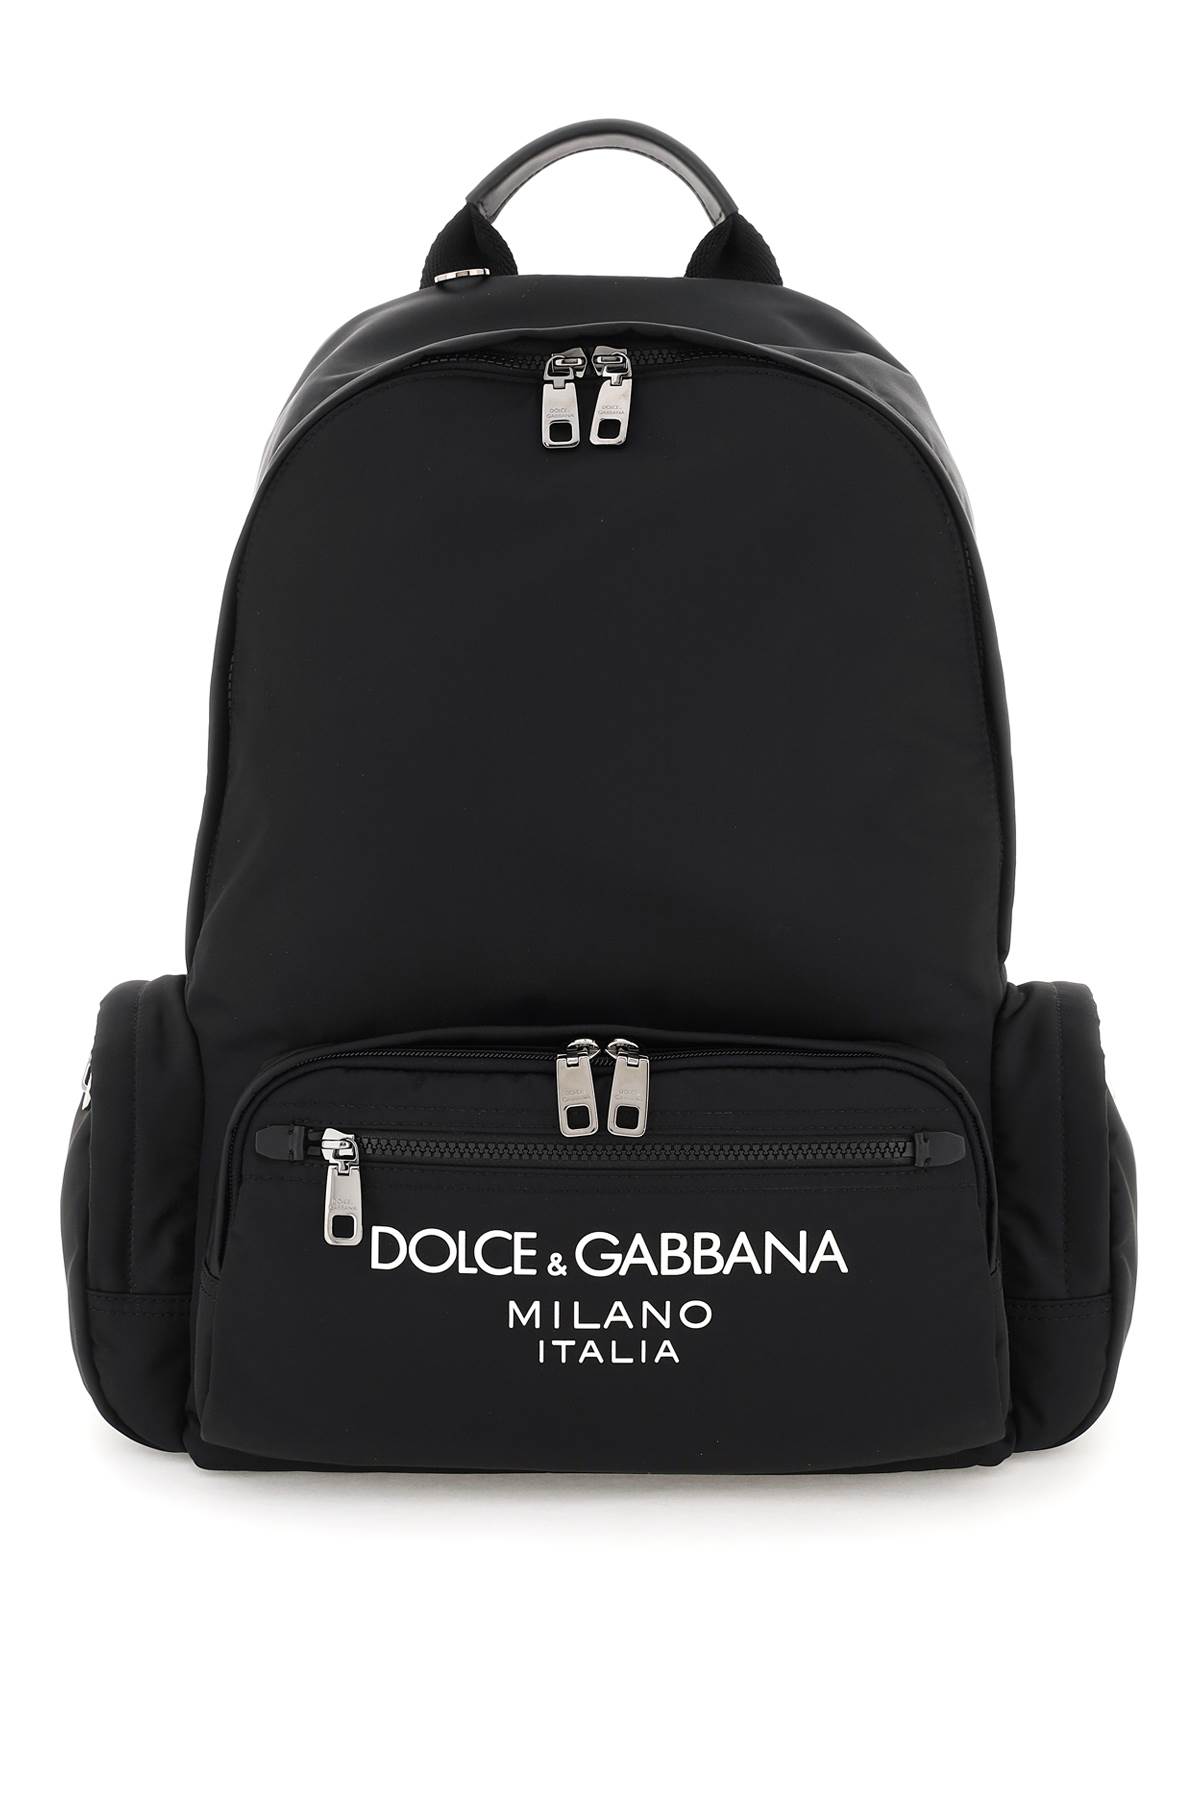 Dolce & Gabbana Nylon Backpack With Logo In Nero Nero (black)